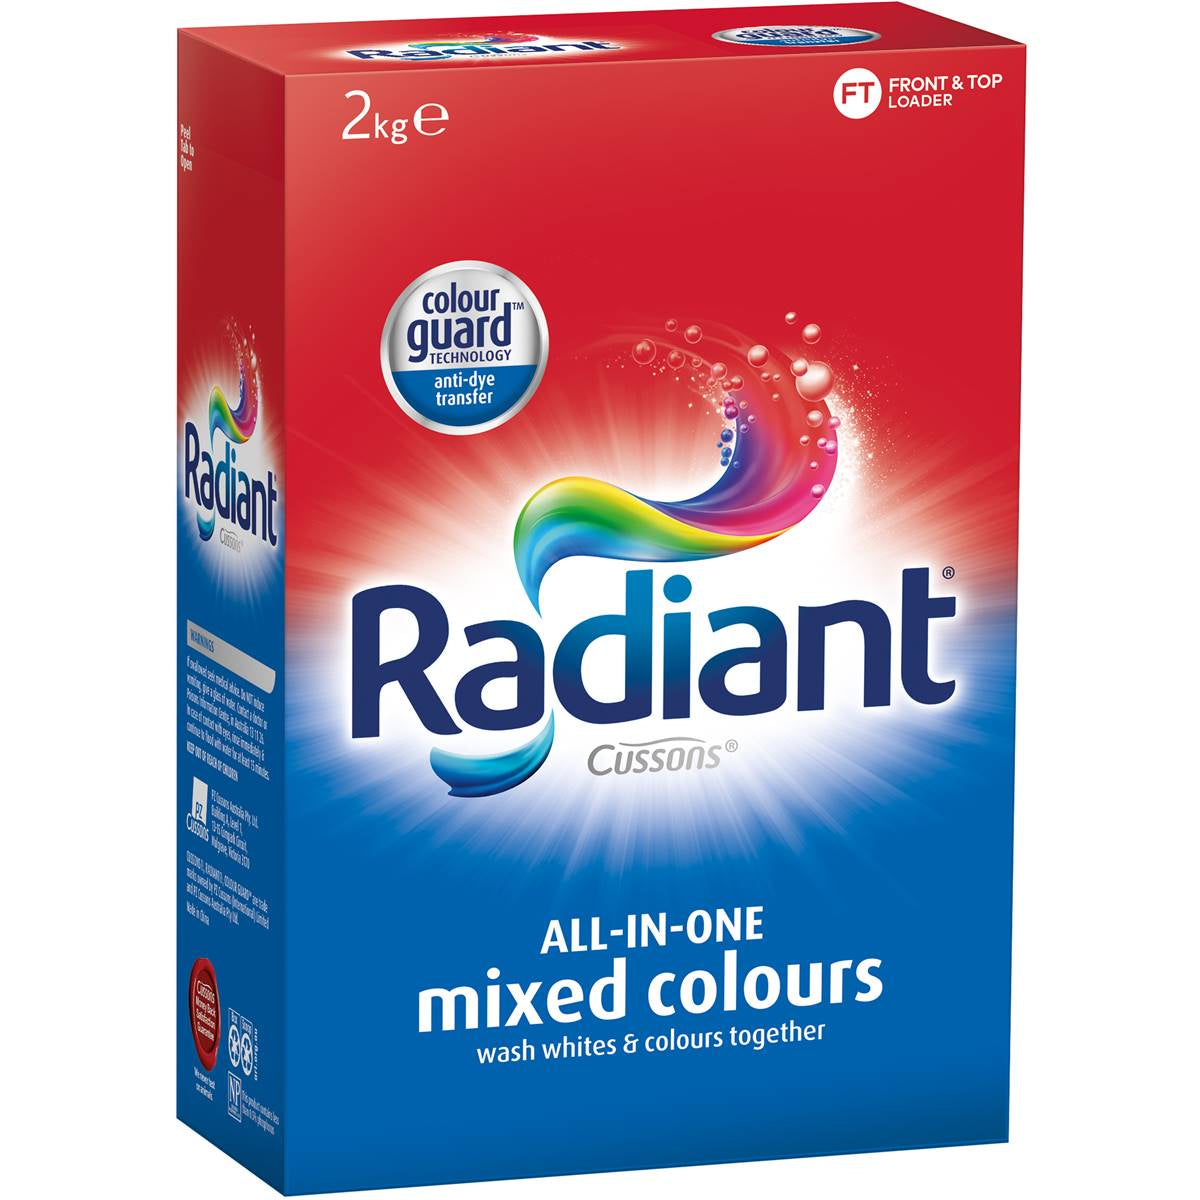 Radiant Mixed Colours Laundry Powder 2kg